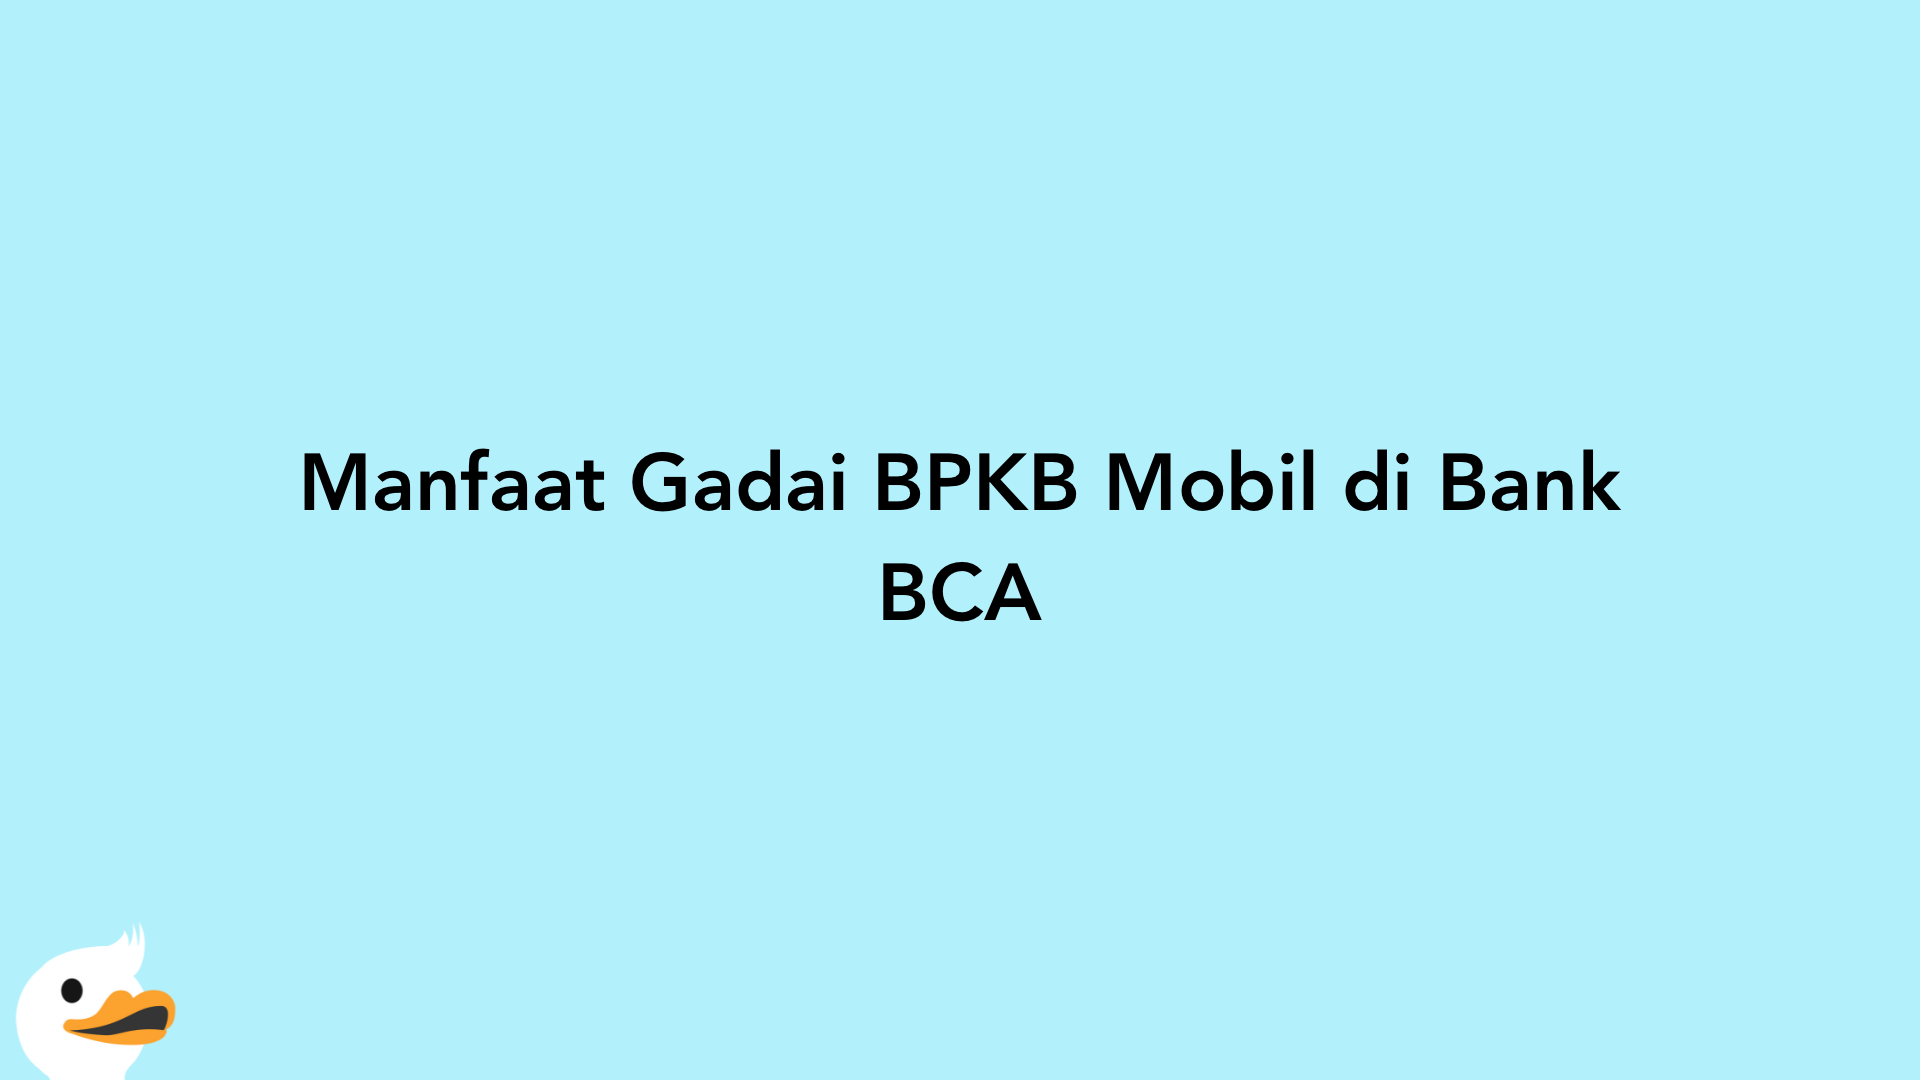 Manfaat Gadai BPKB Mobil di Bank BCA